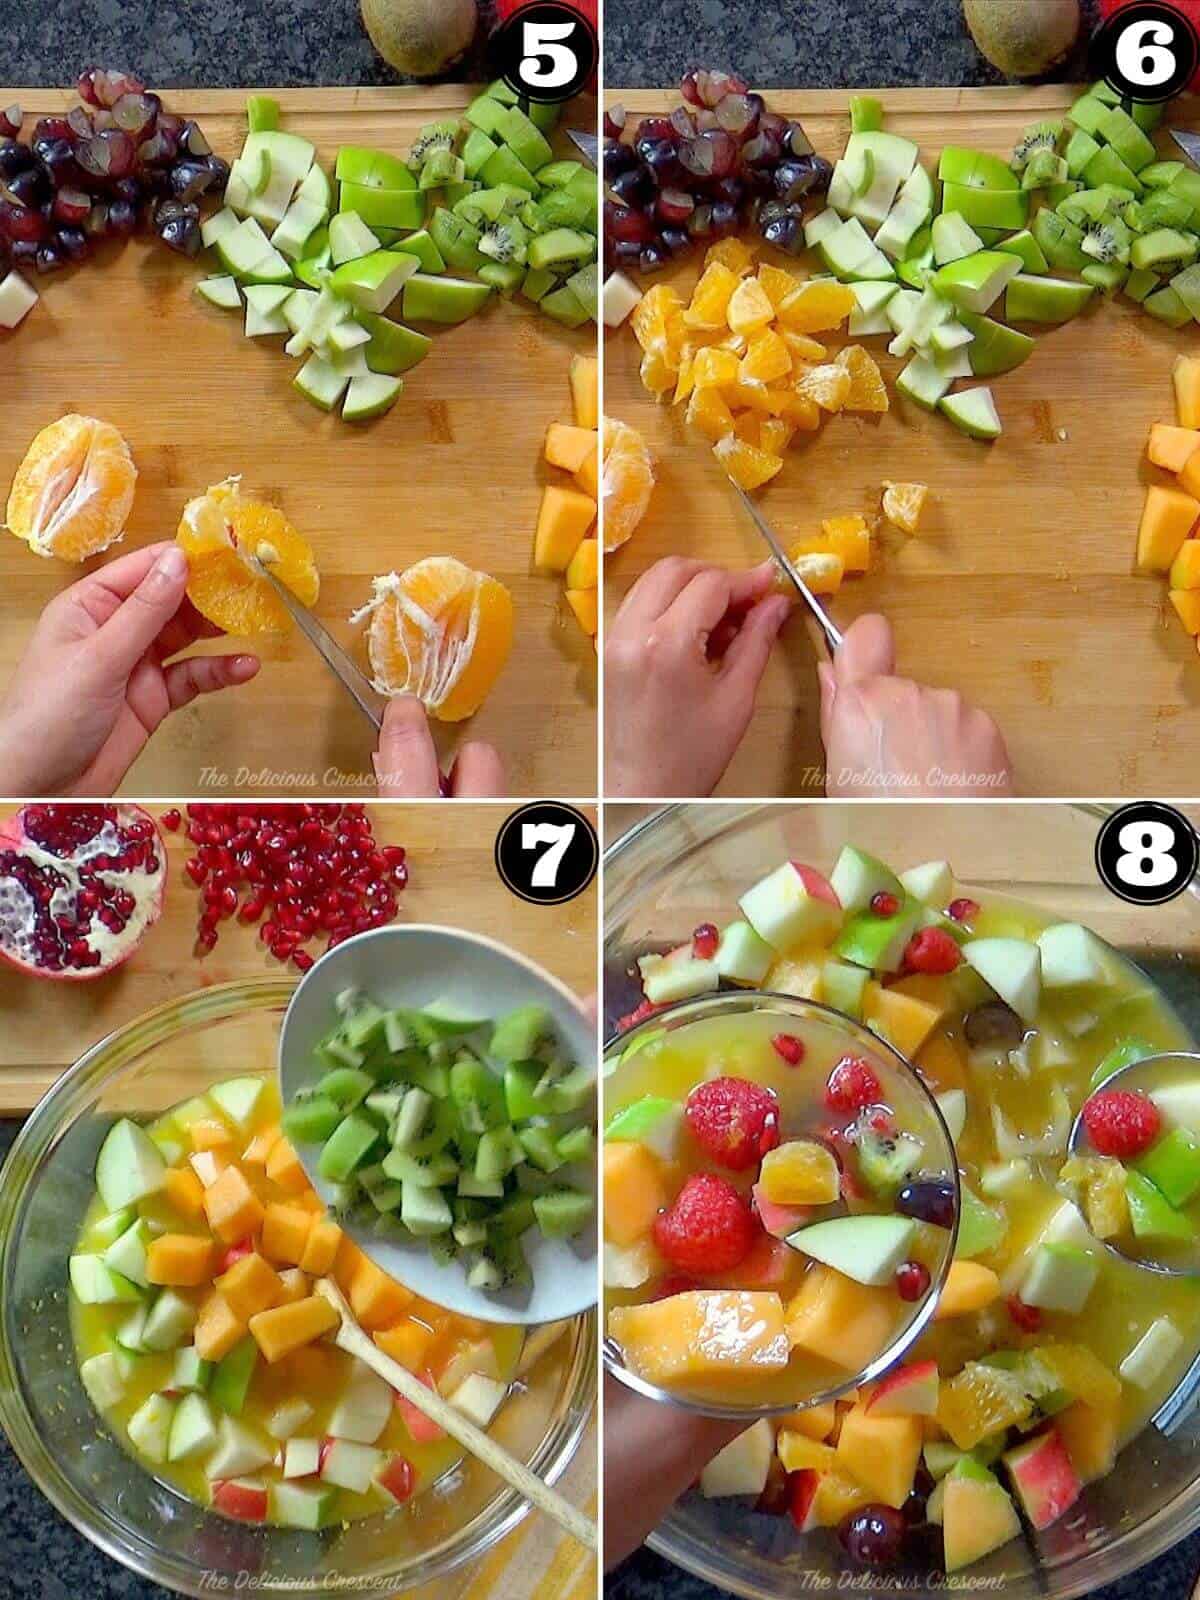 Chopping fruits and making the salad.